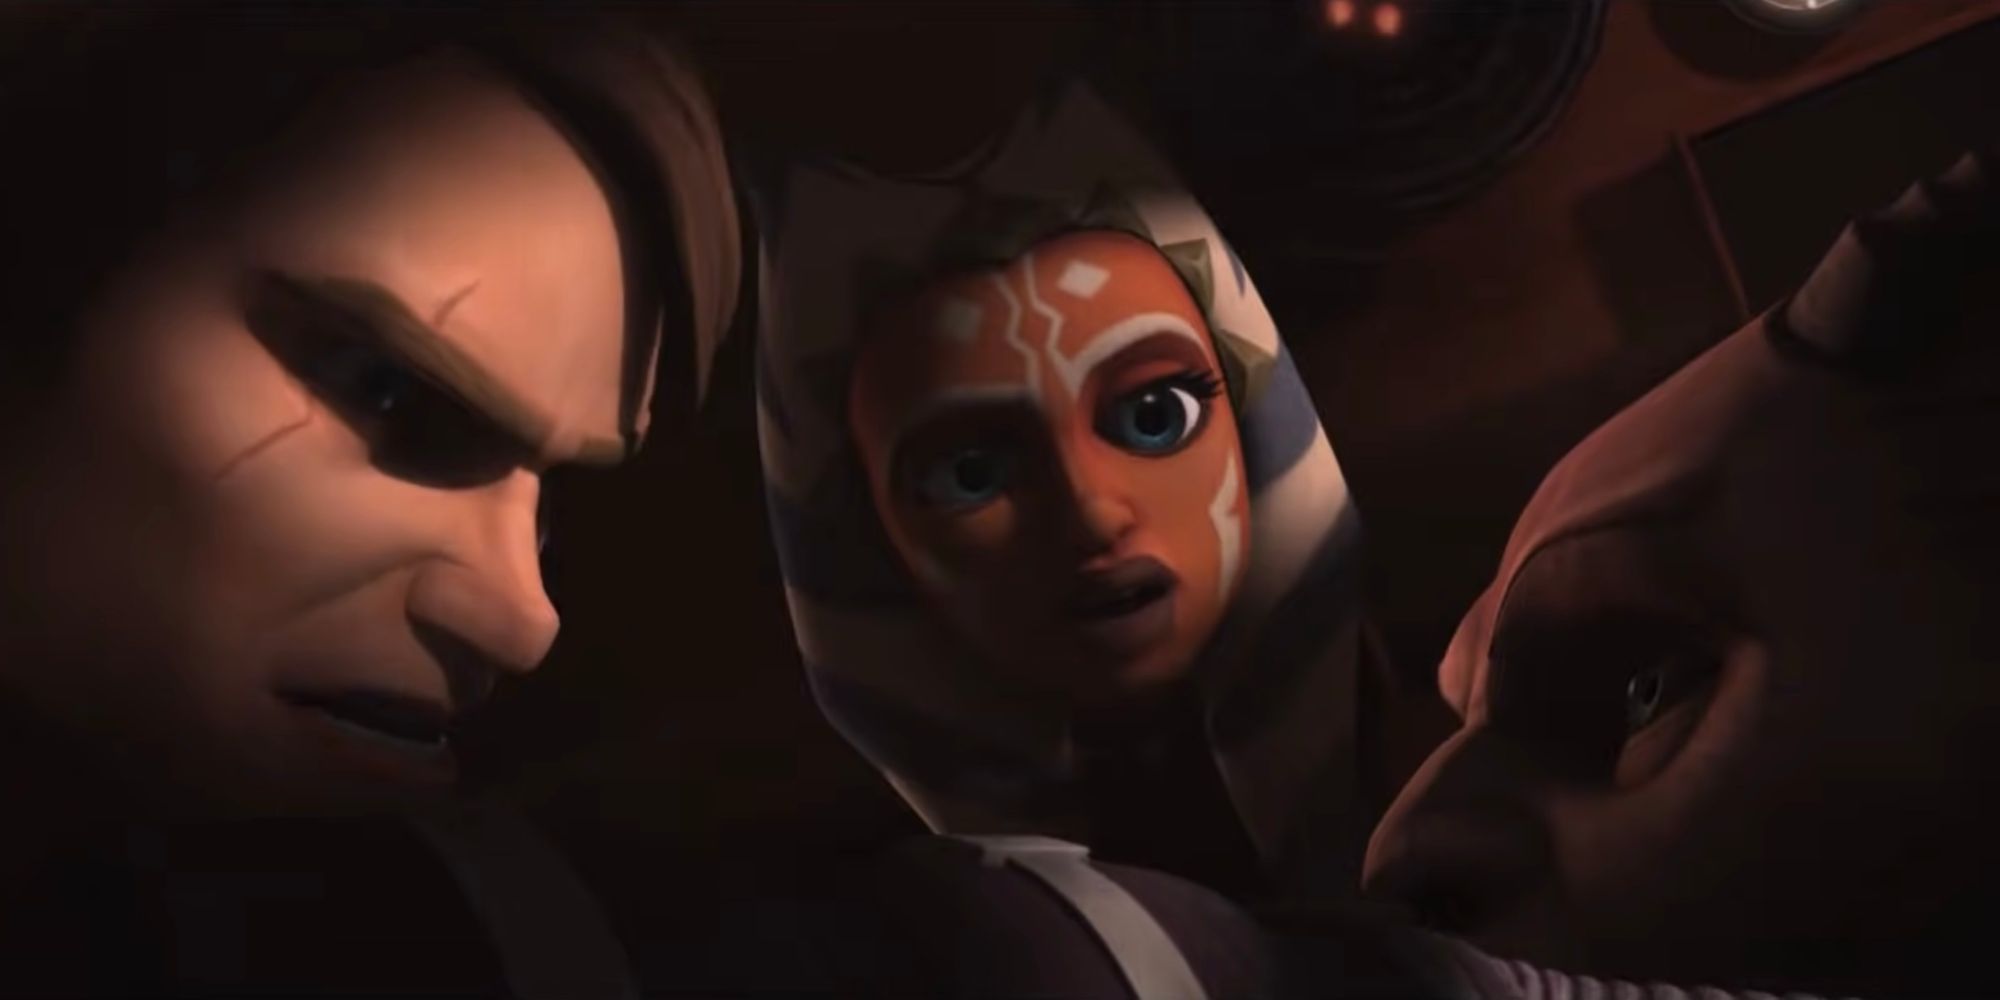 Anakin threatens D'Nar in front of Ahsoka in Clone Wars TV series